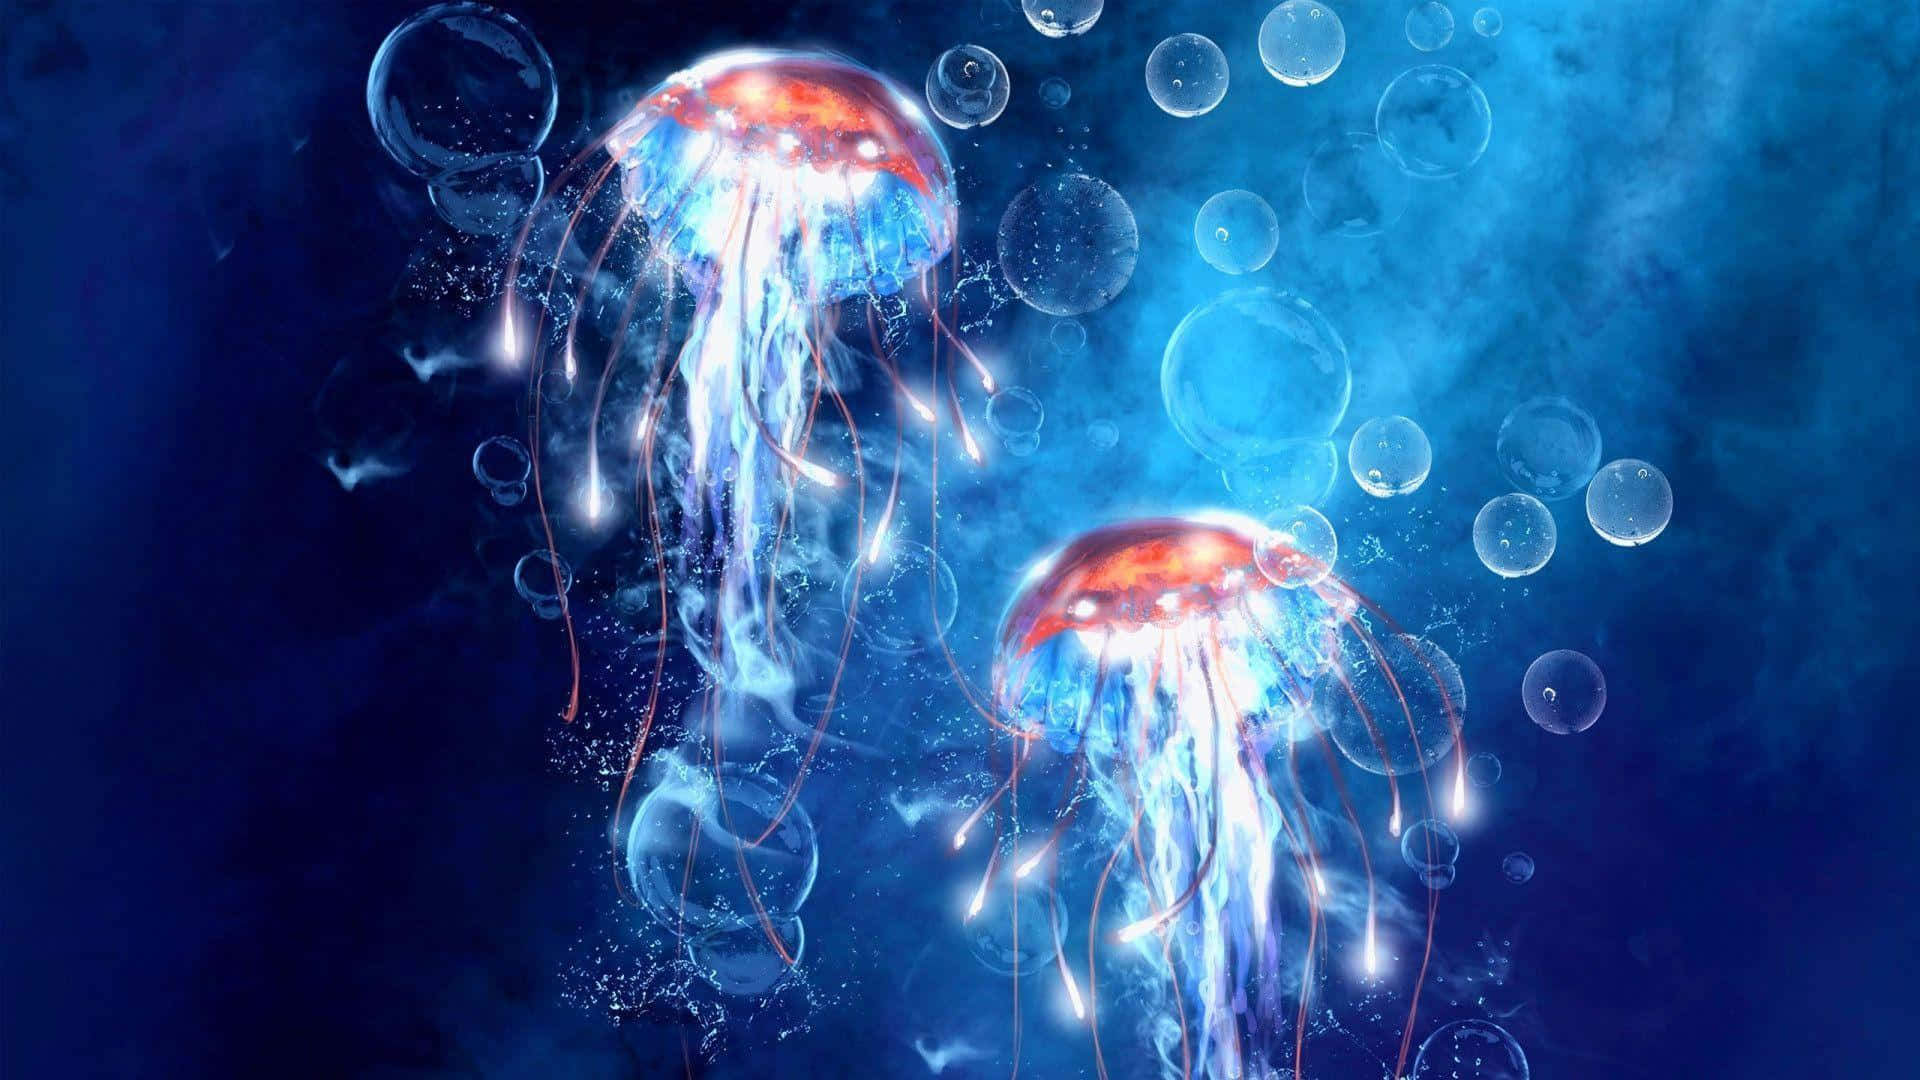 Glowing Jellyfish Underwater Scene Wallpaper